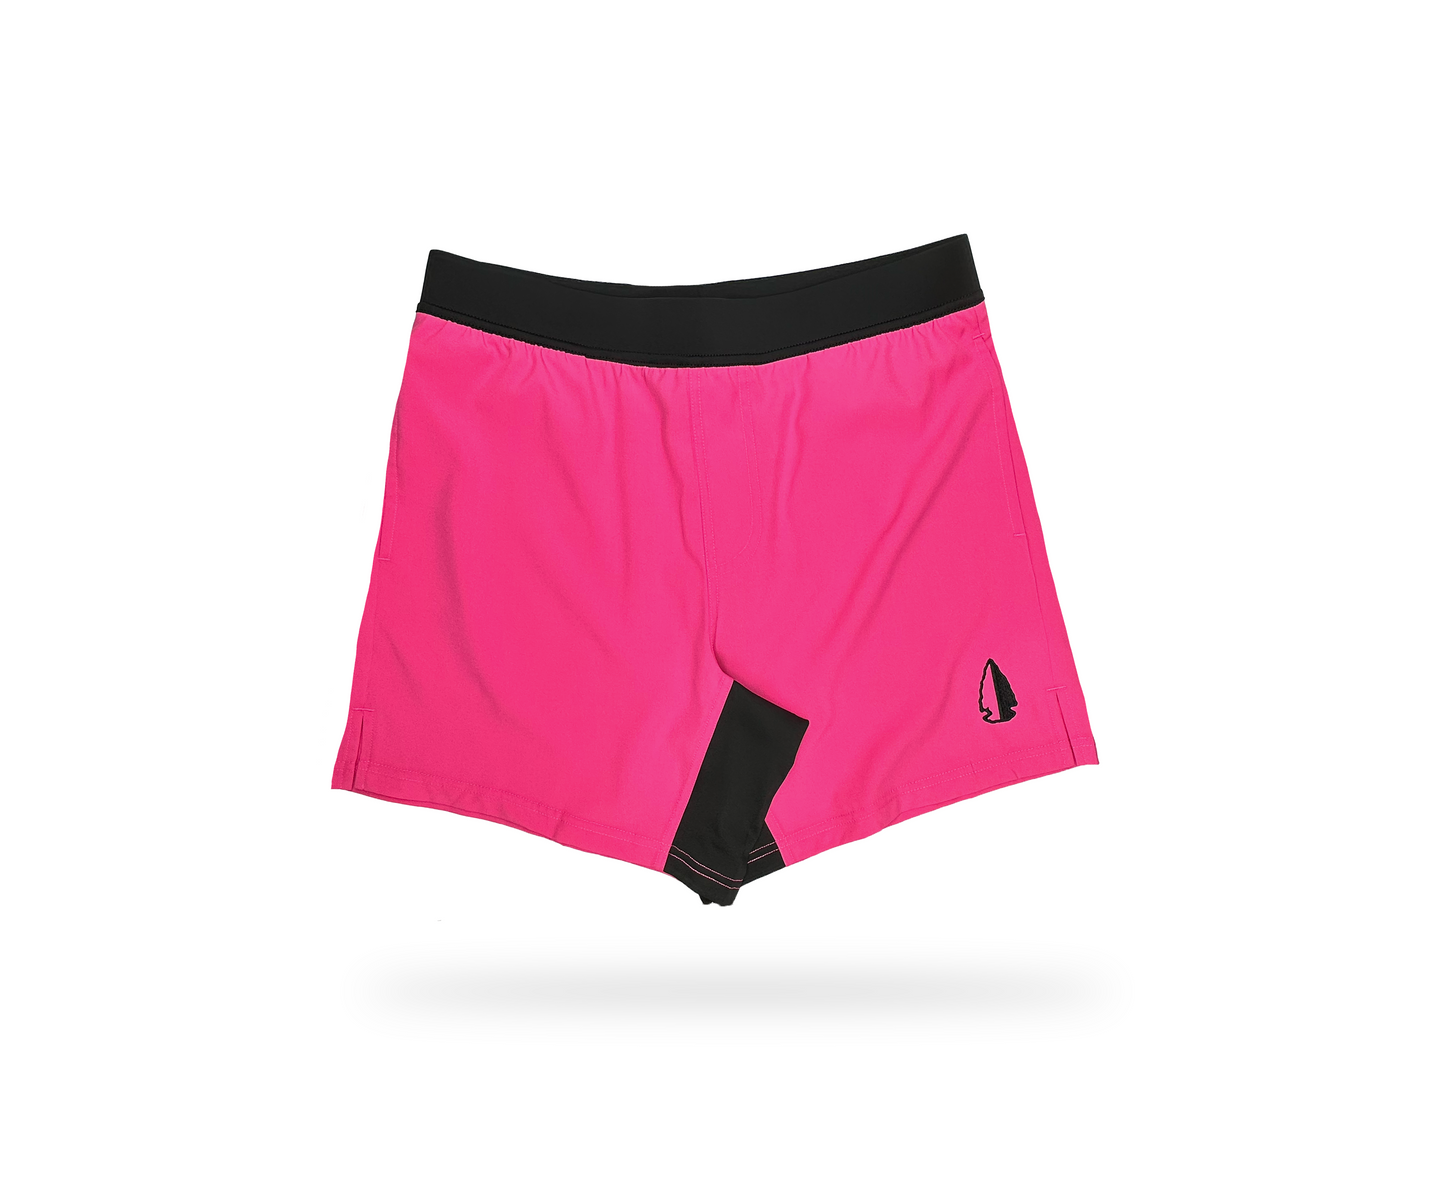 THF Athletic Shorts - Pinks